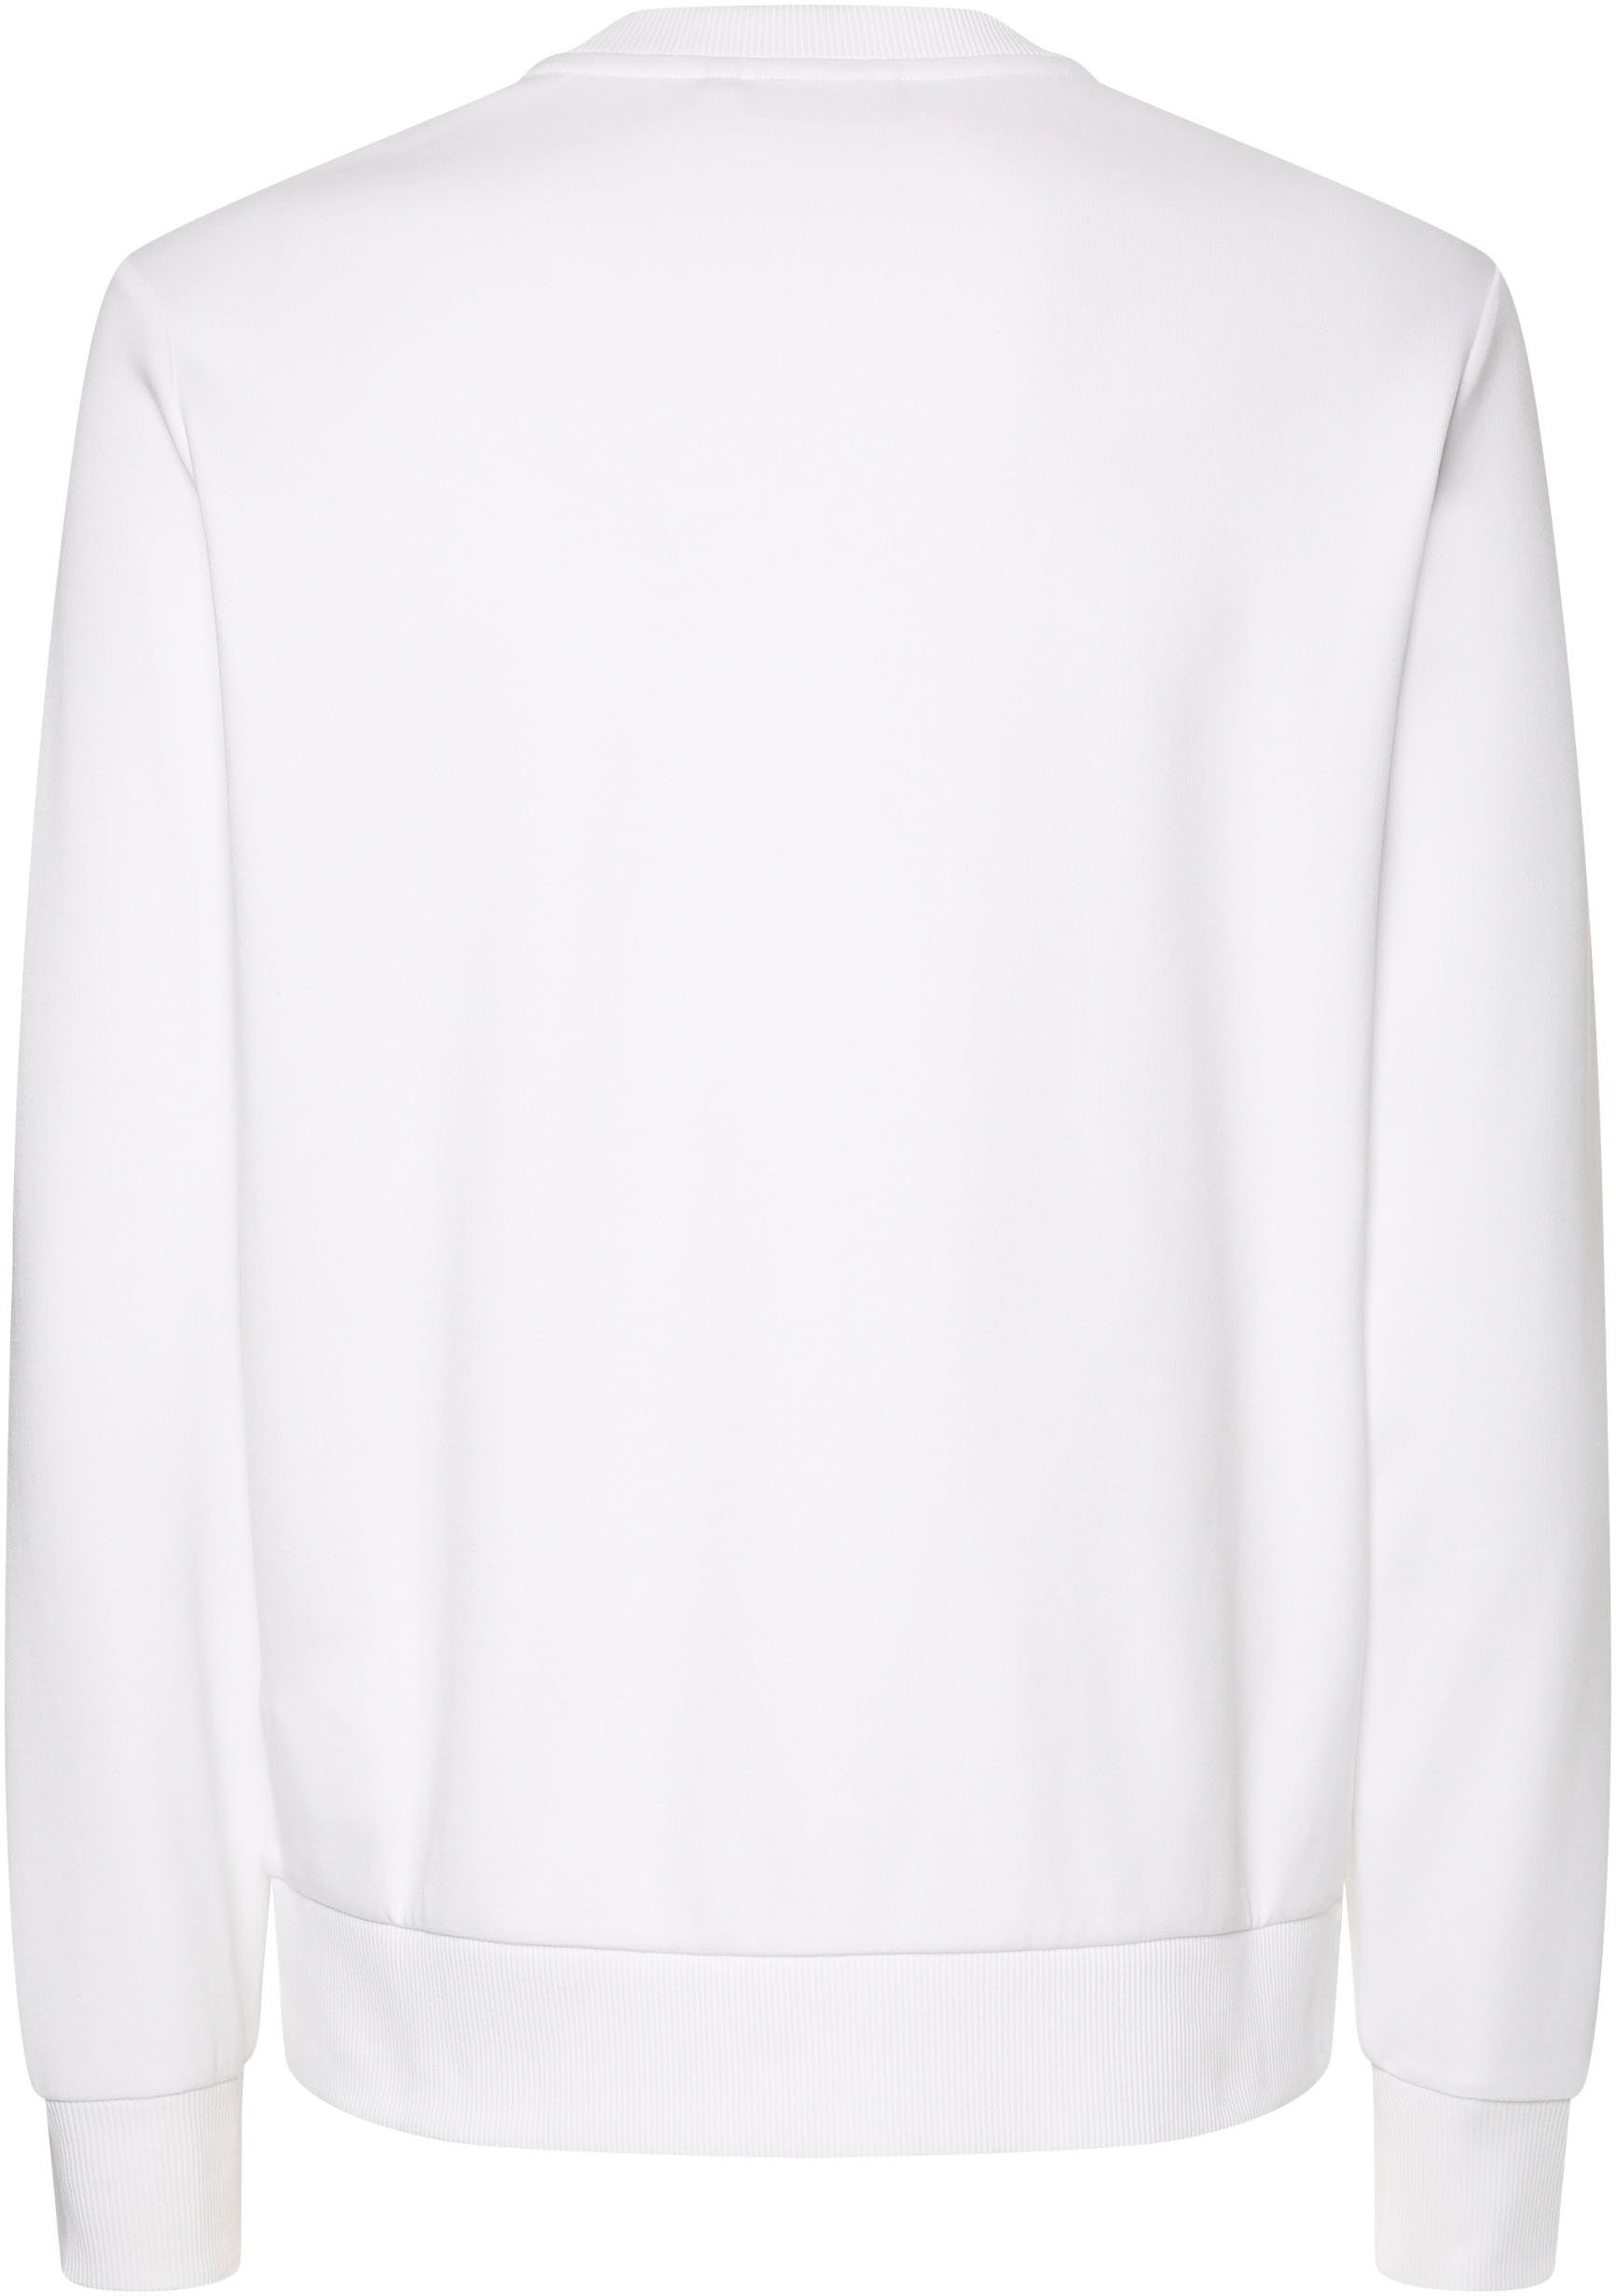 Sweatshirt MICRO Klein Calvin LOGO white SWEATSHIRT bright